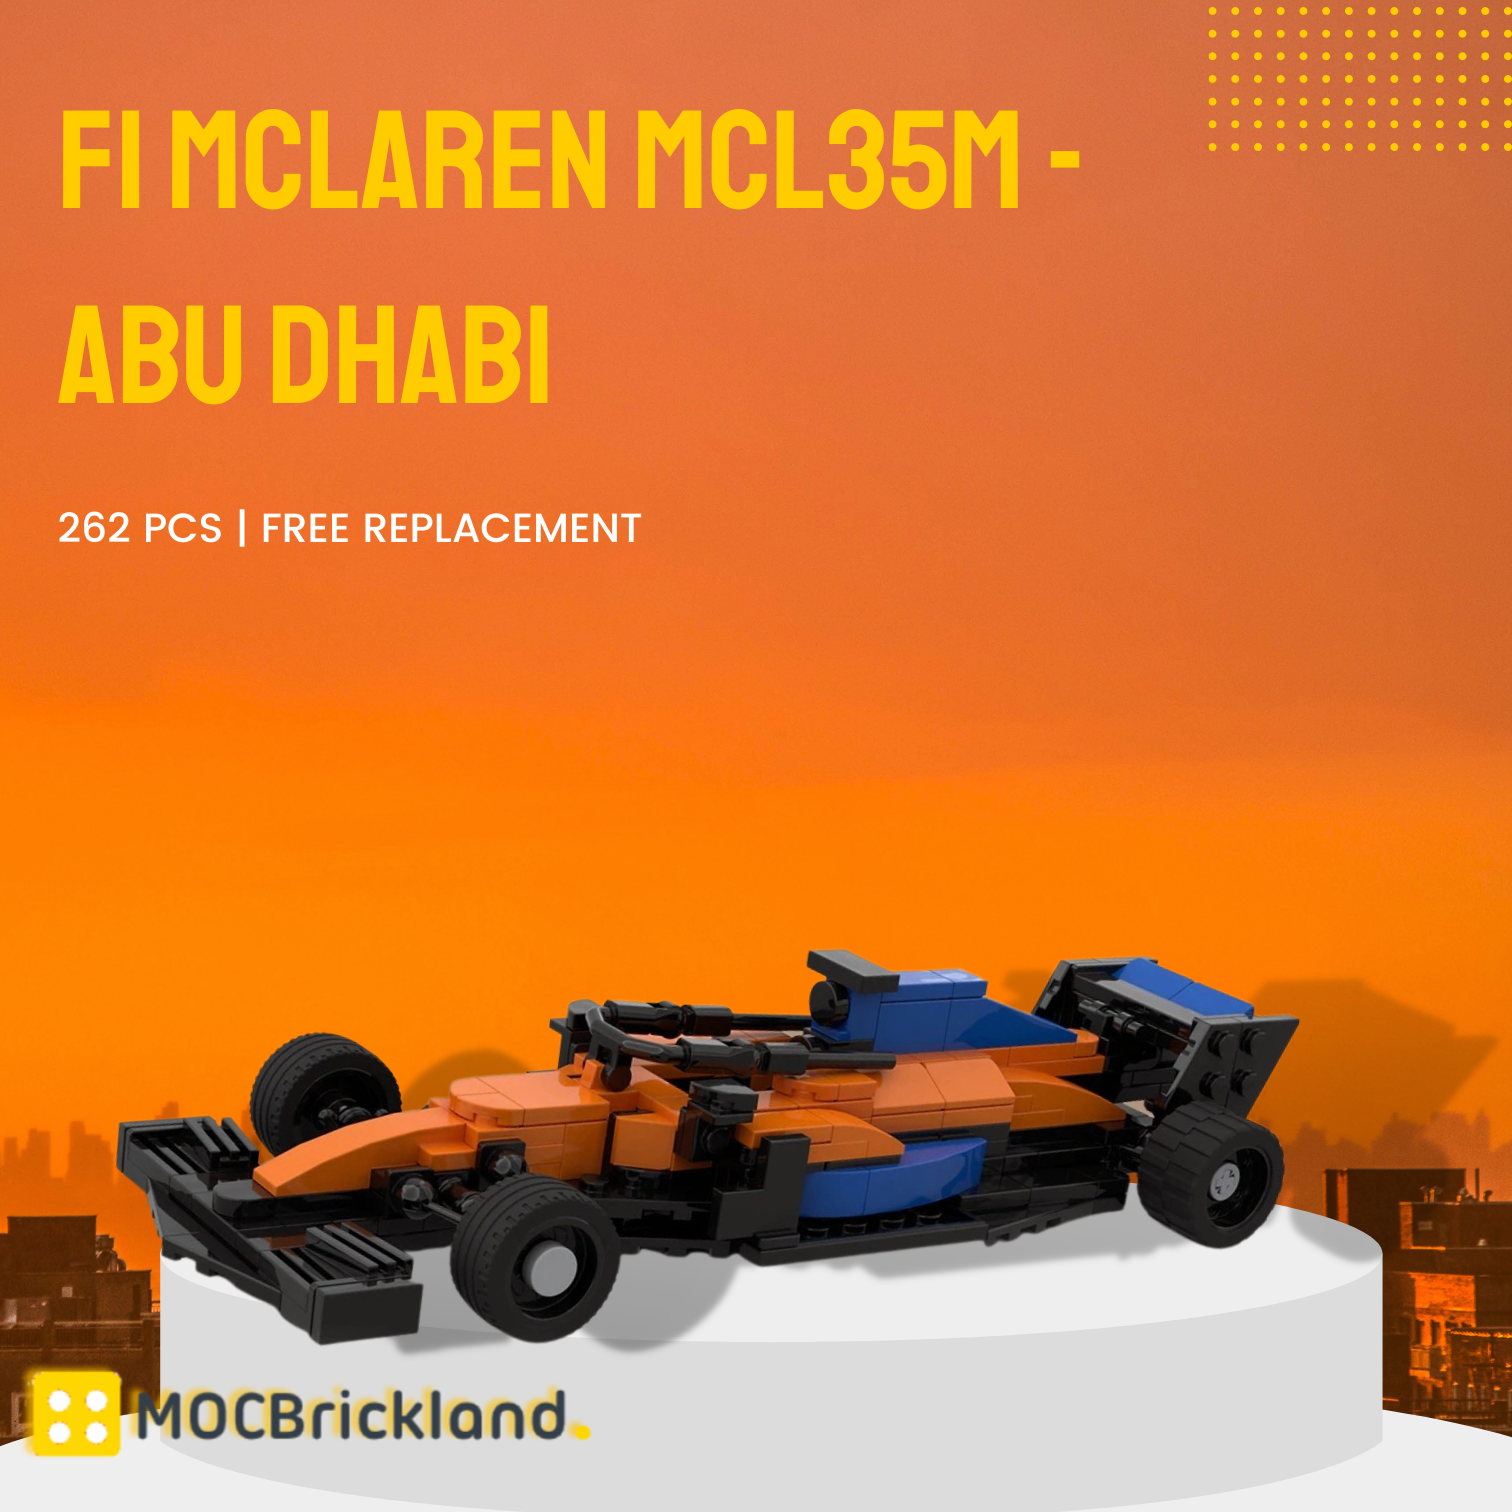 F1 Mclaren Mcl35m Abu Dhabi Moc 98621